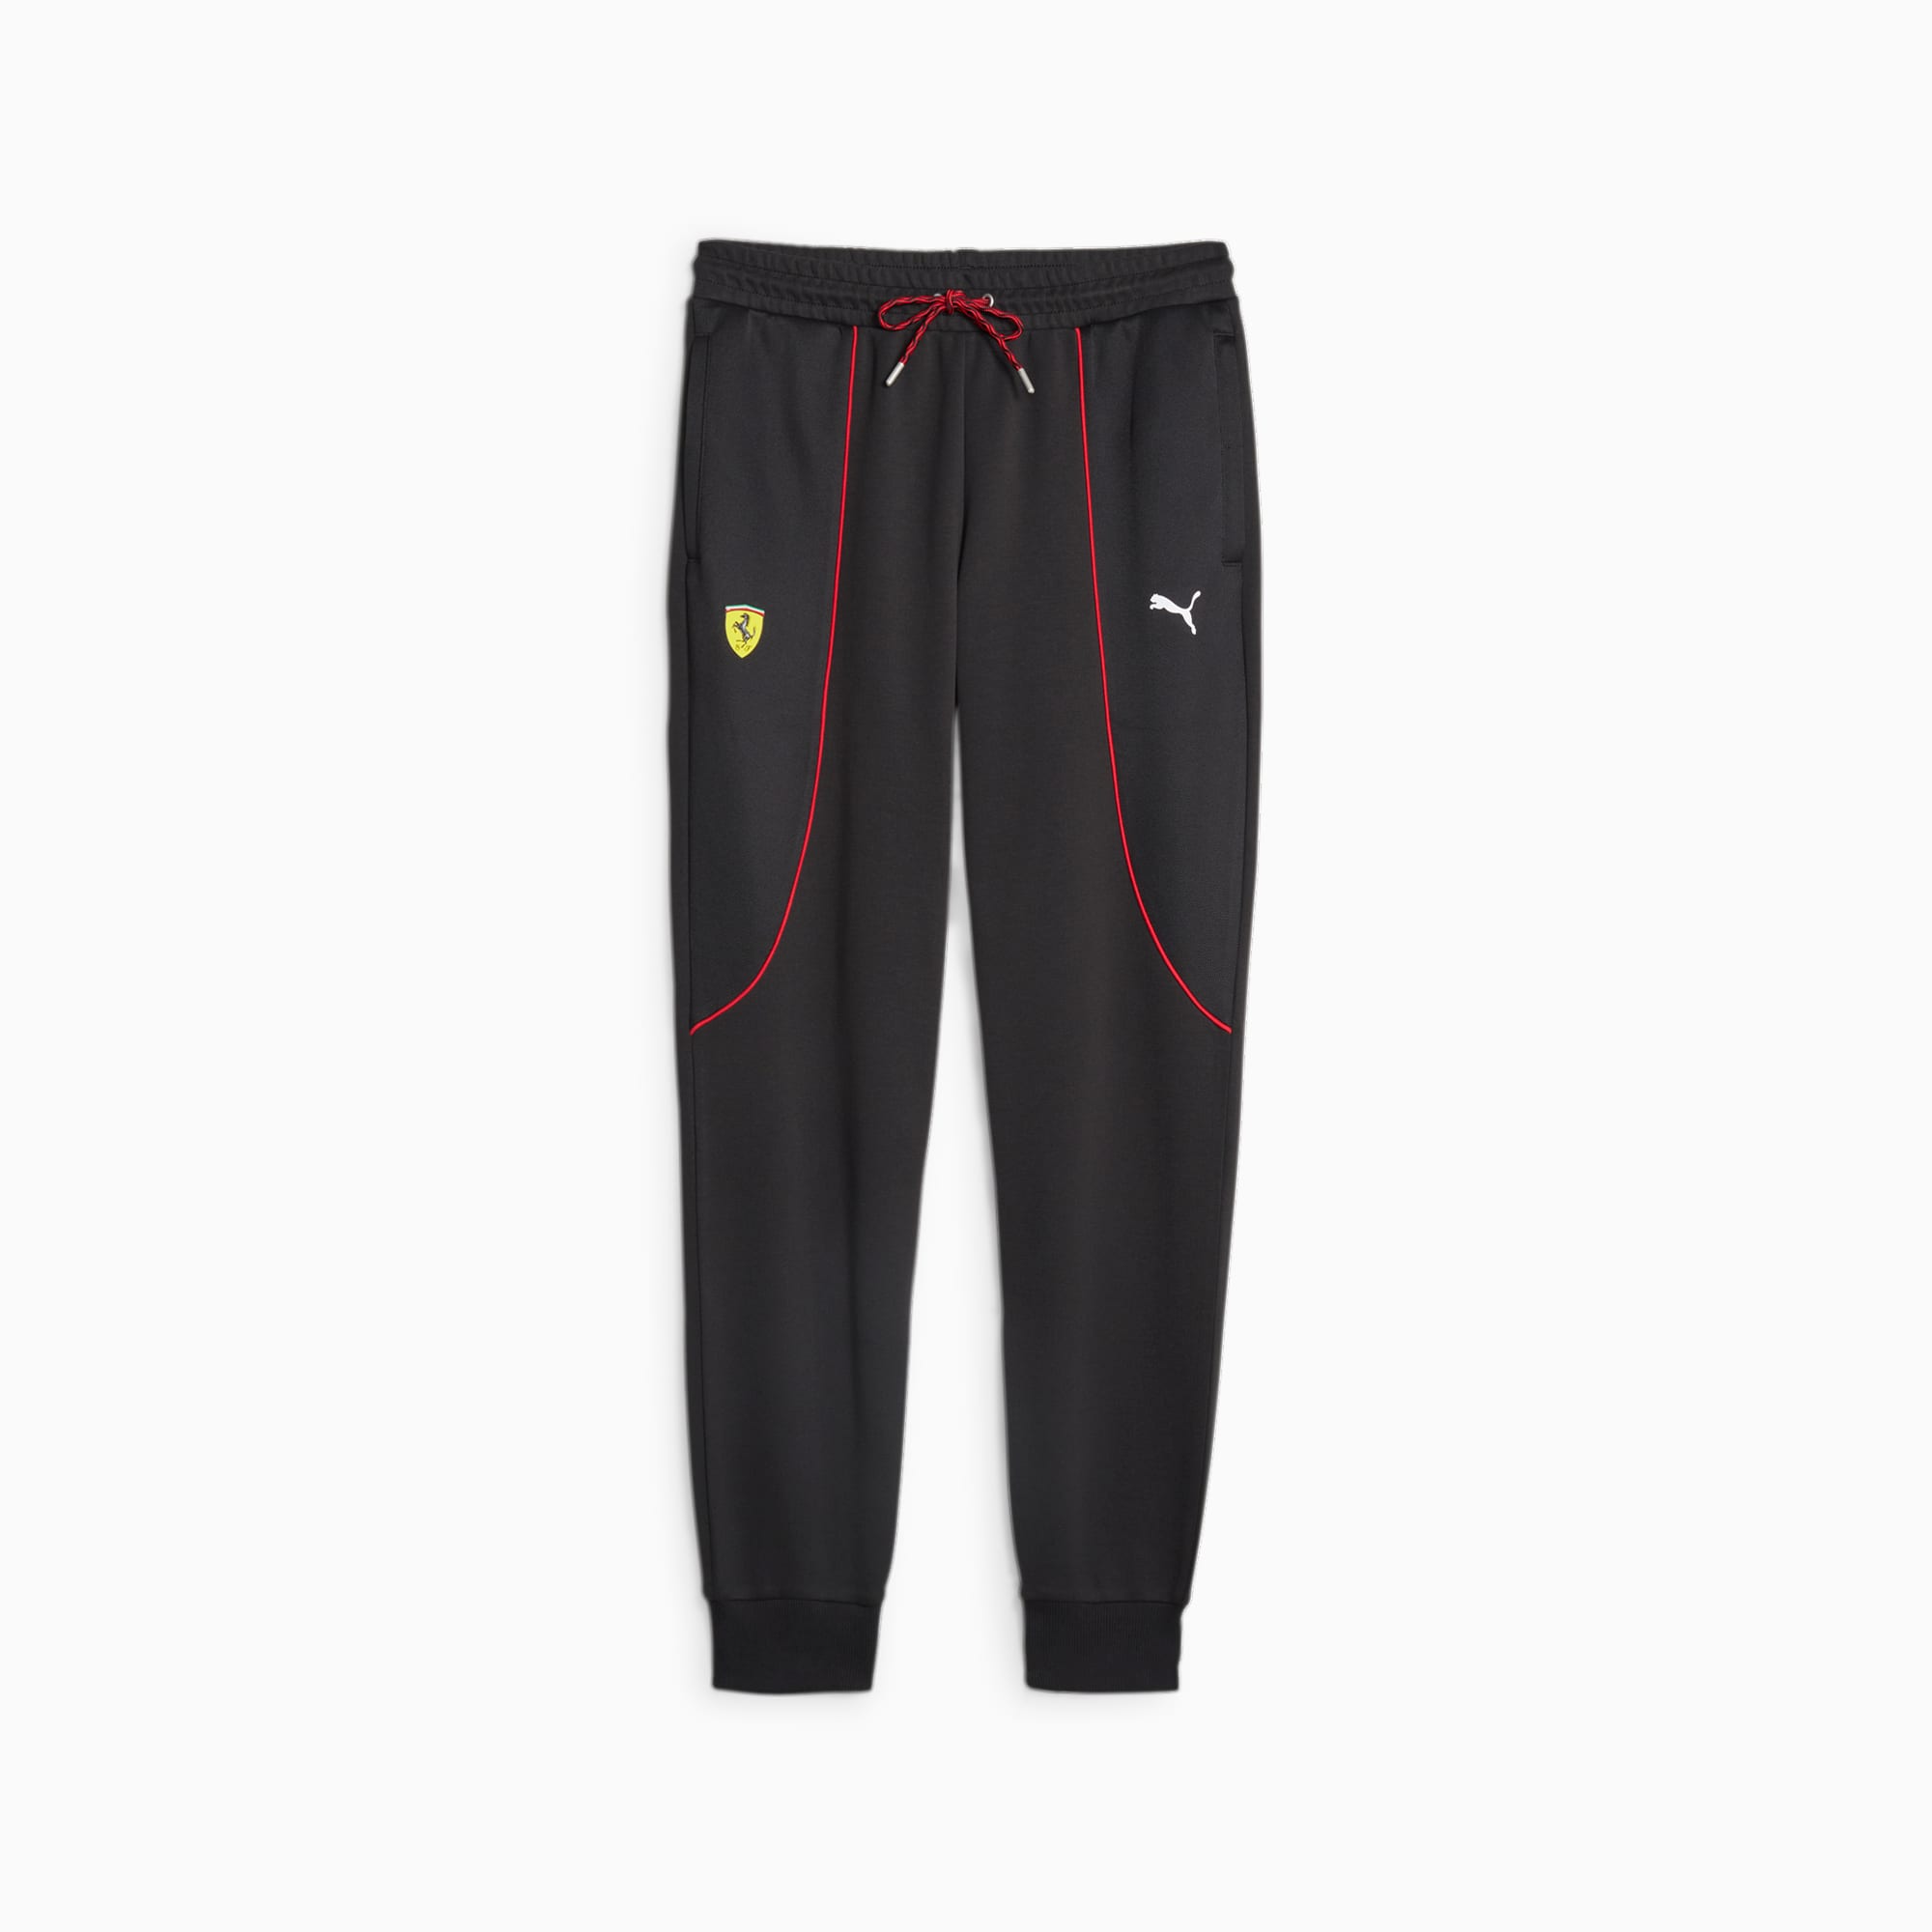 PUMA Scuderia Ferrari Race Men's Sweatpants, Black